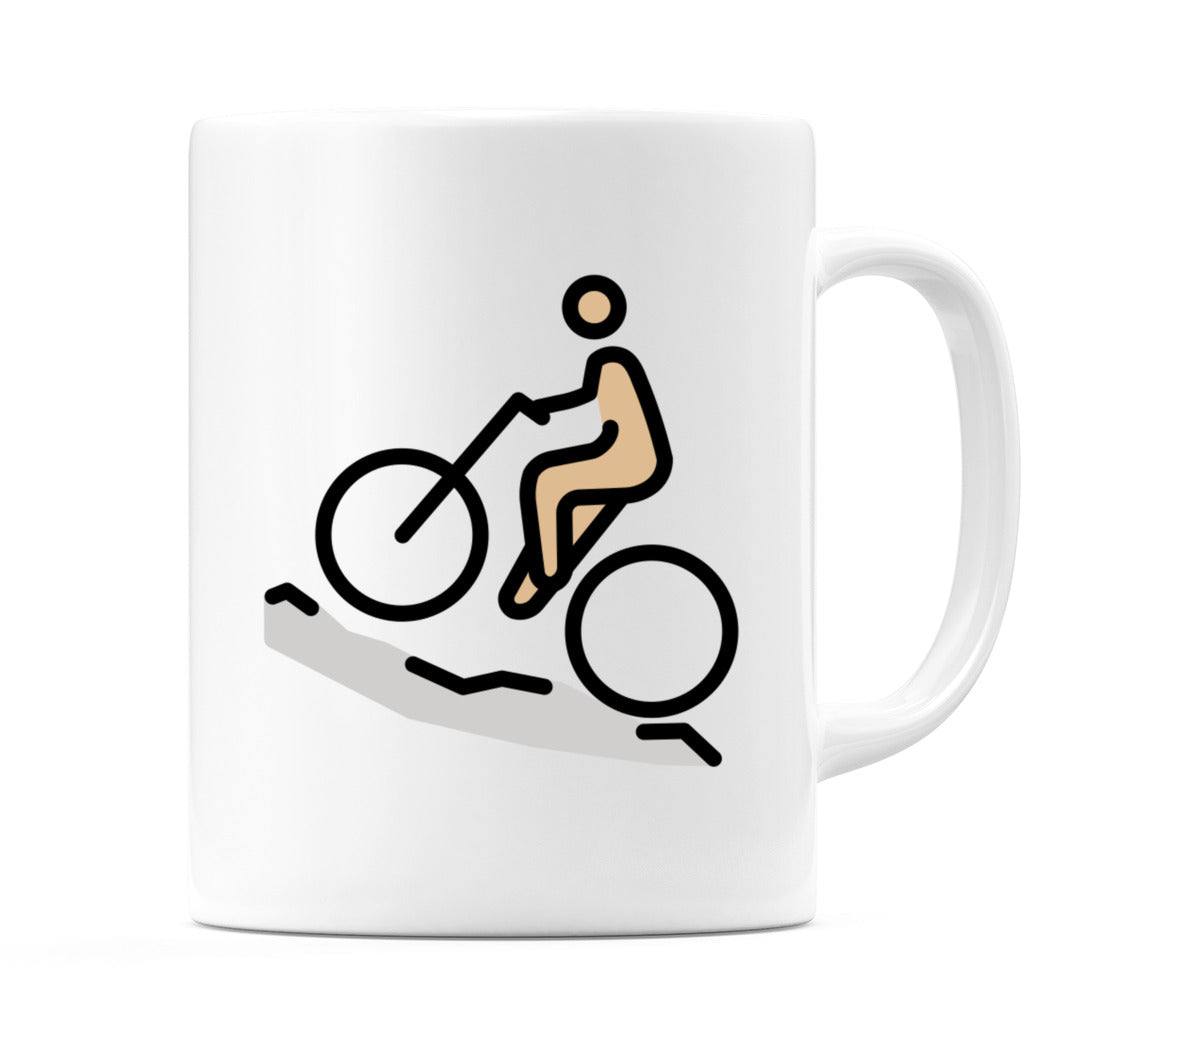 Male Mountain Biking: Medium-Light Skin Tone Emoji Mug